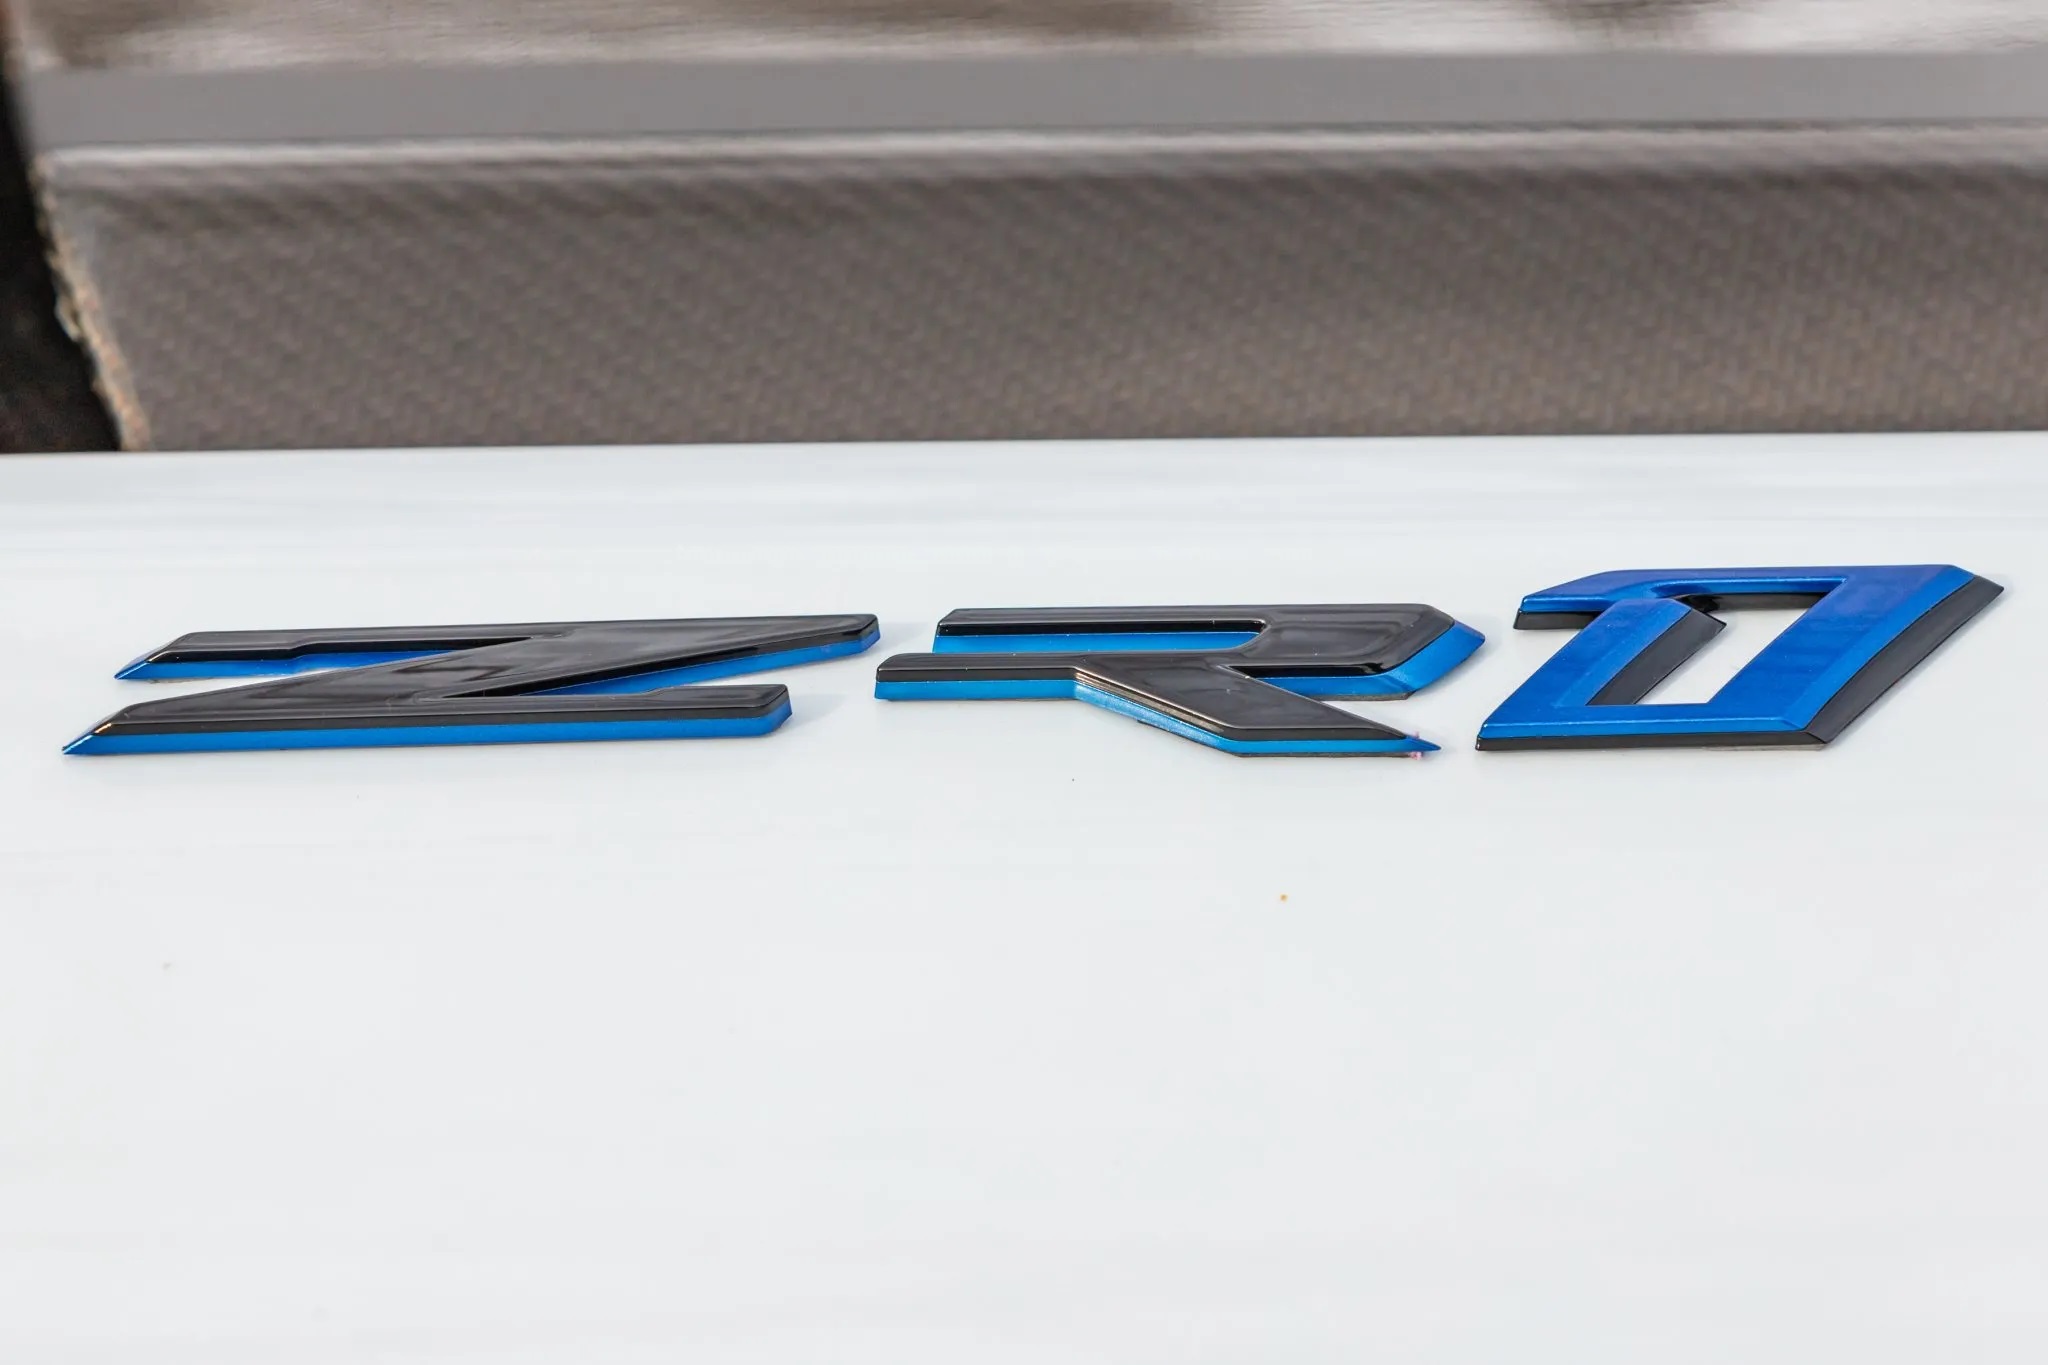 2019 Chevrolet Corvette ZR1 Coupe